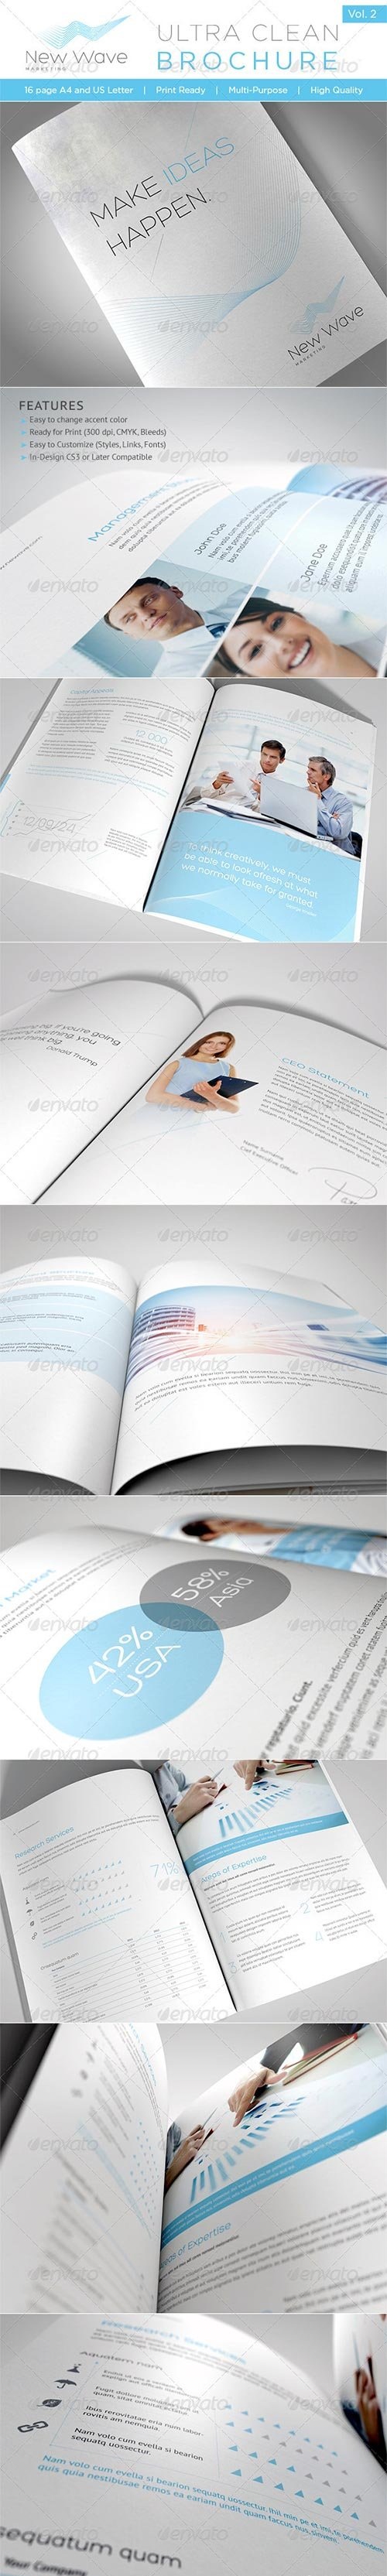 GraphicRiver - Ultra Clean Brochure Vol. 2